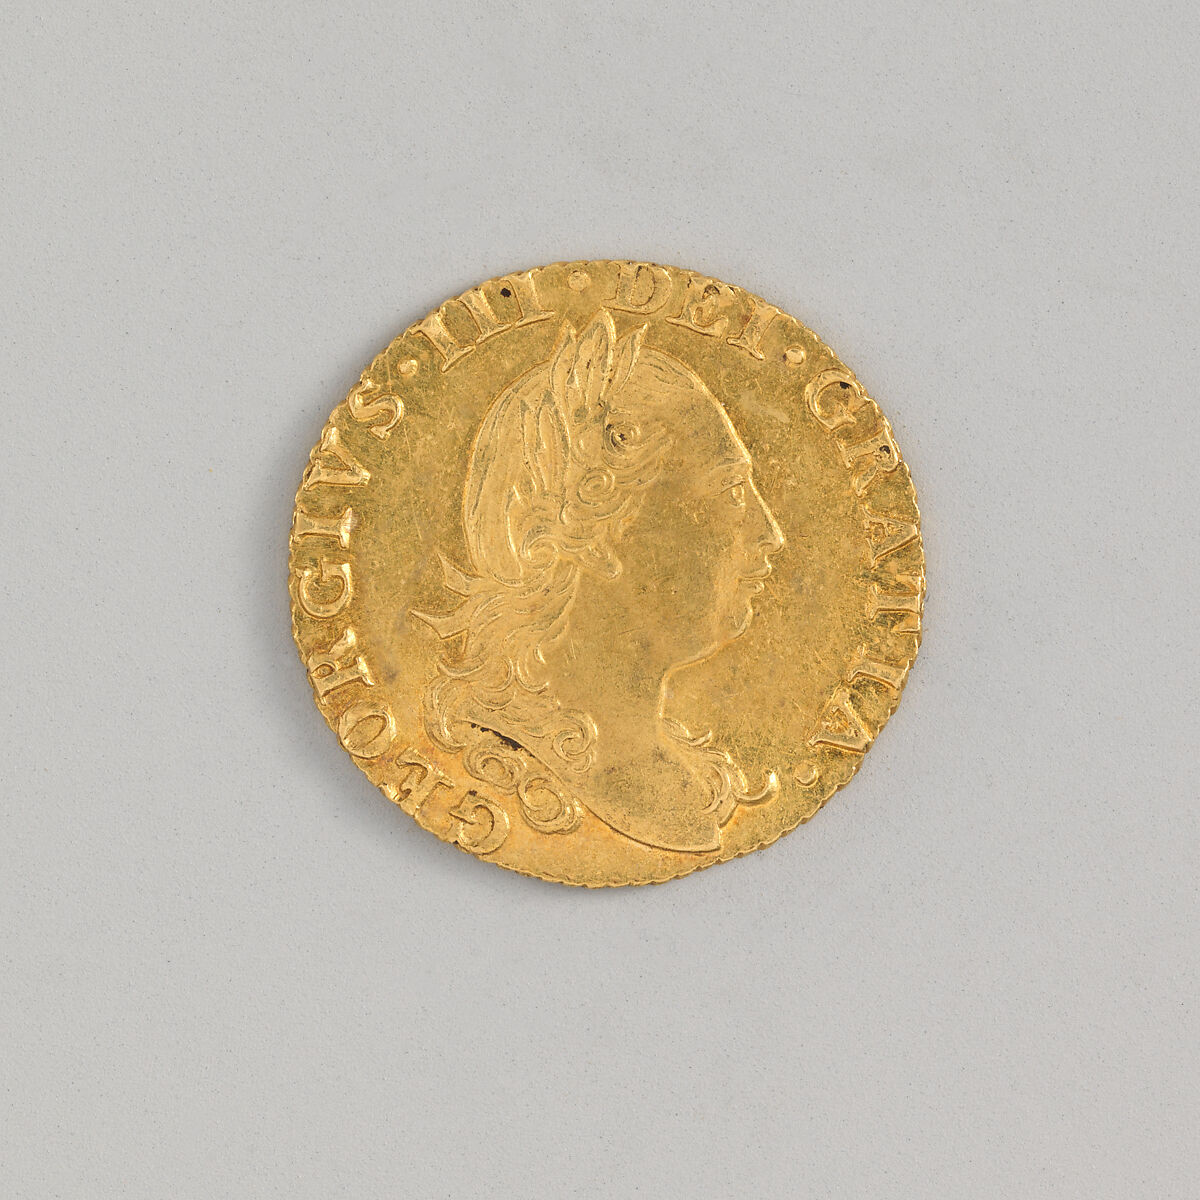 George III half guinea, Medalist: Thomas Pingo (Italian, 1692–1776, active England after 1742), Gold, British 